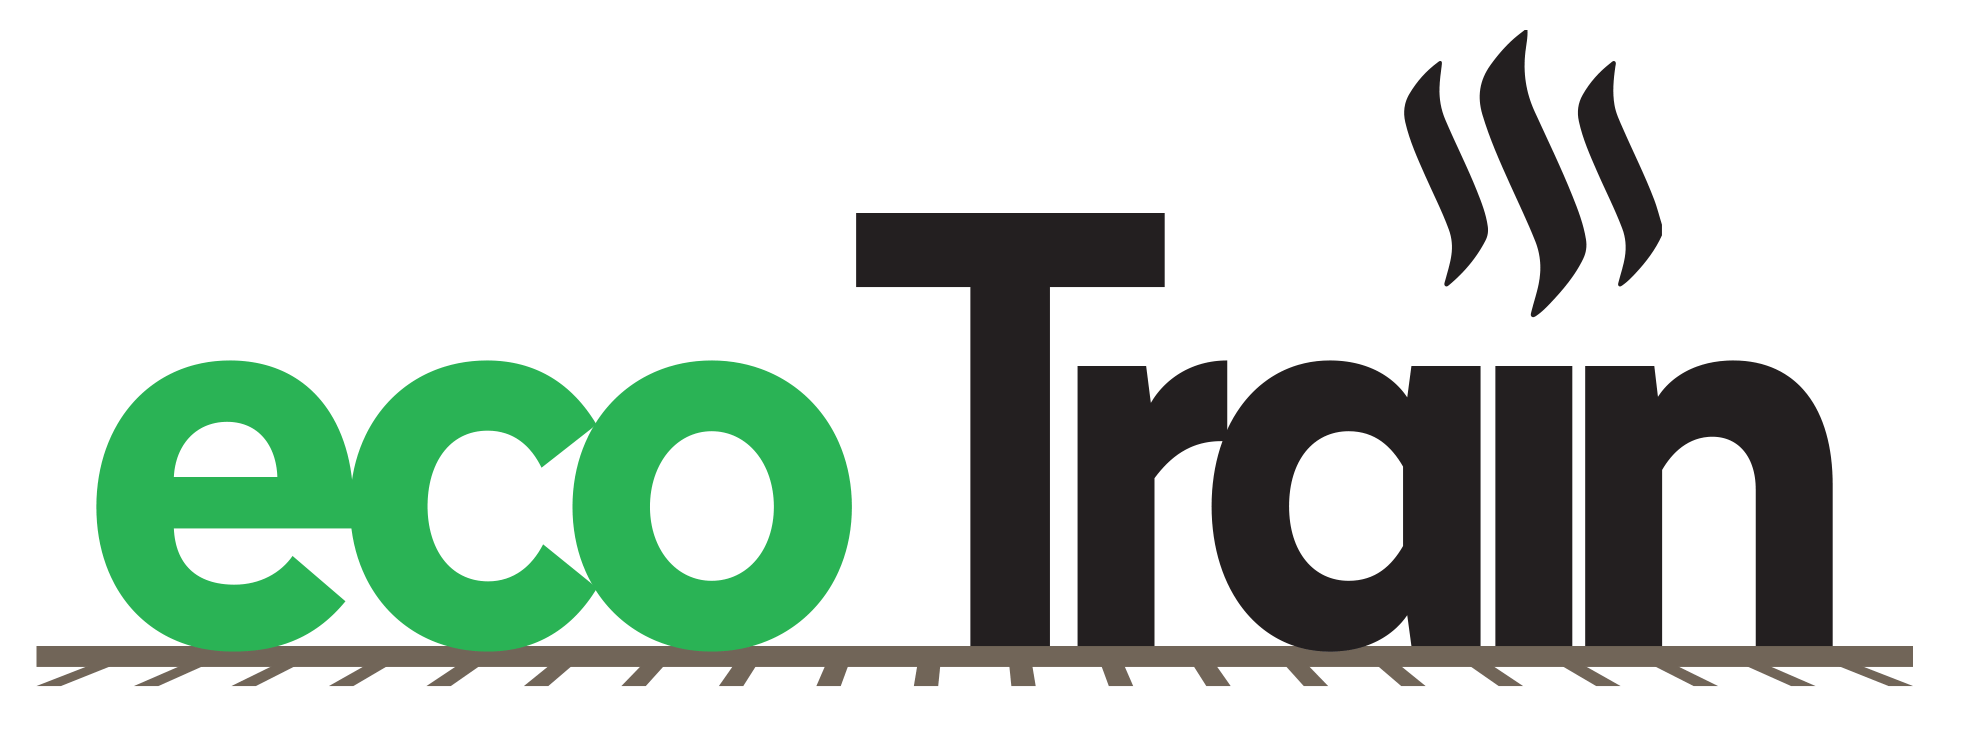 ecoTrain-logo-greens.gif